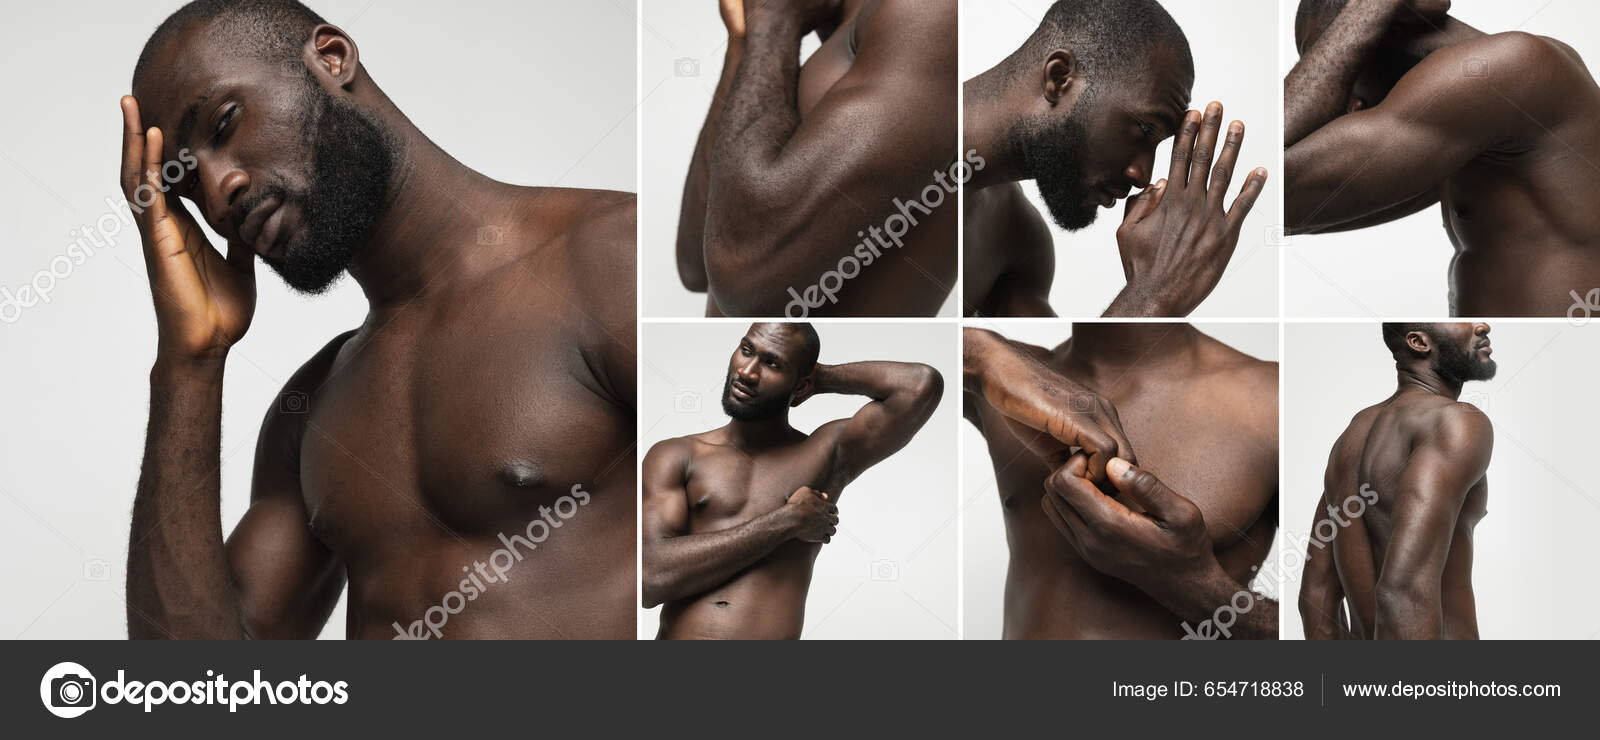 Men's photoshoot ideas | Men photoshoot, Mens photoshoot poses, Photography  poses for men